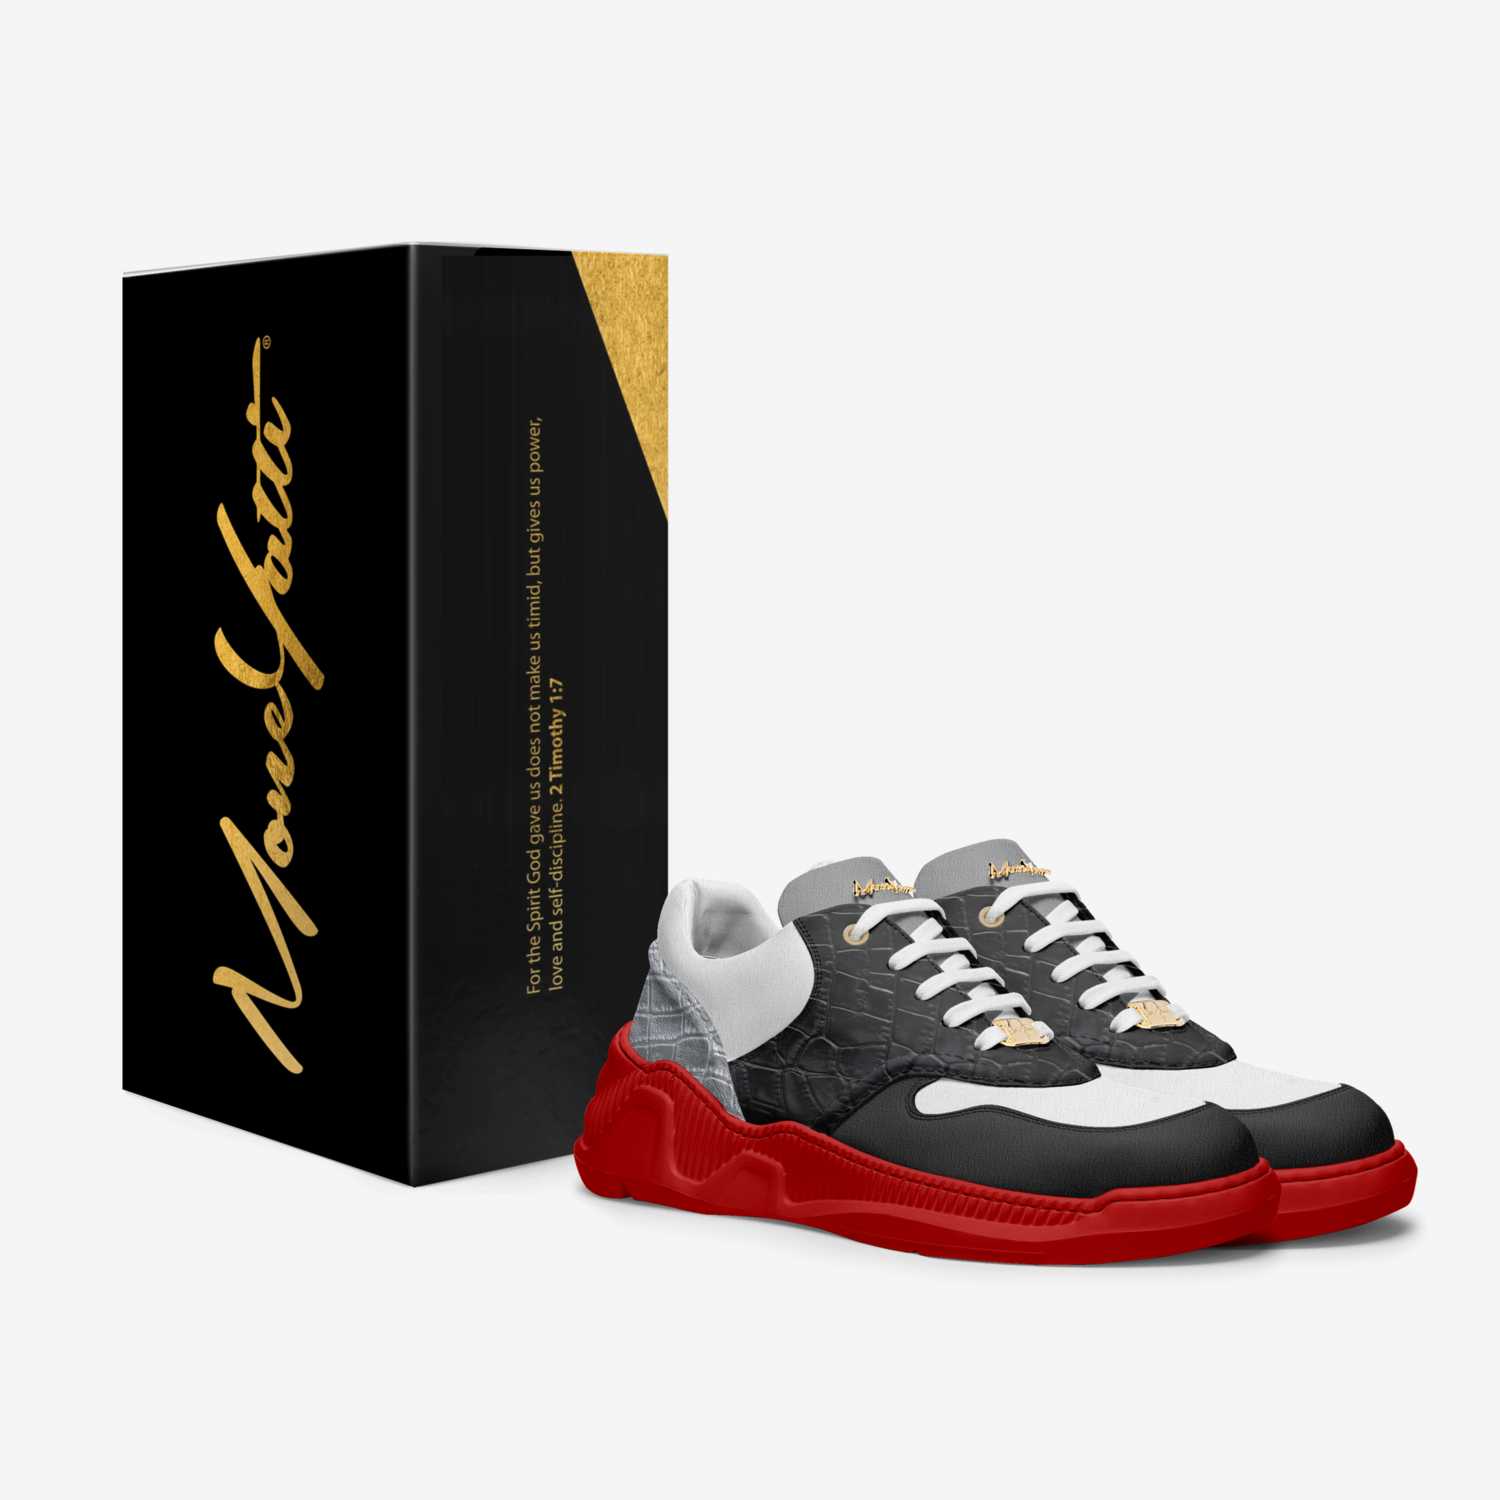 Moneyatti Miller41 custom made in Italy shoes by Moneyatti Brand | Box view